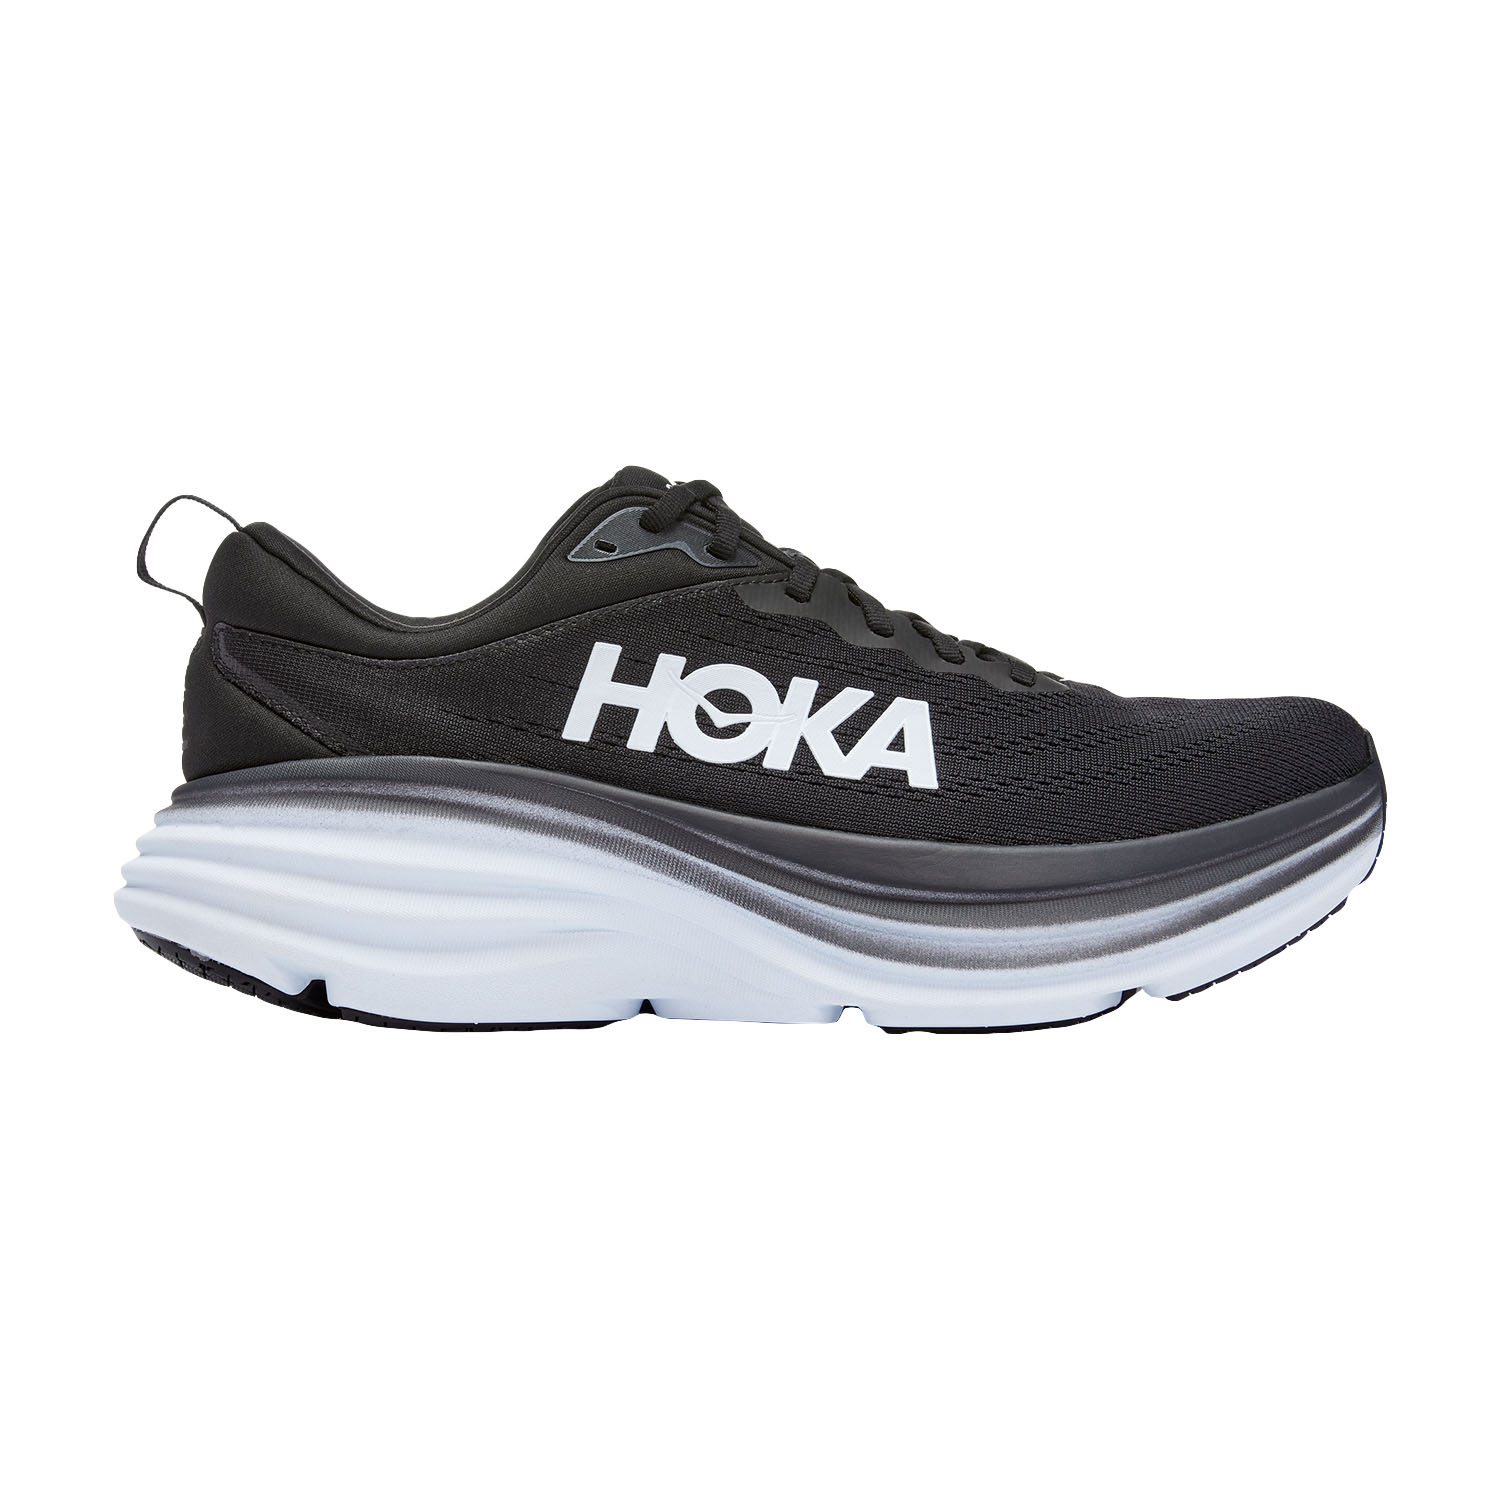 Hoka One One Bondi 8 Wide Men's Running Shoes - Black/White